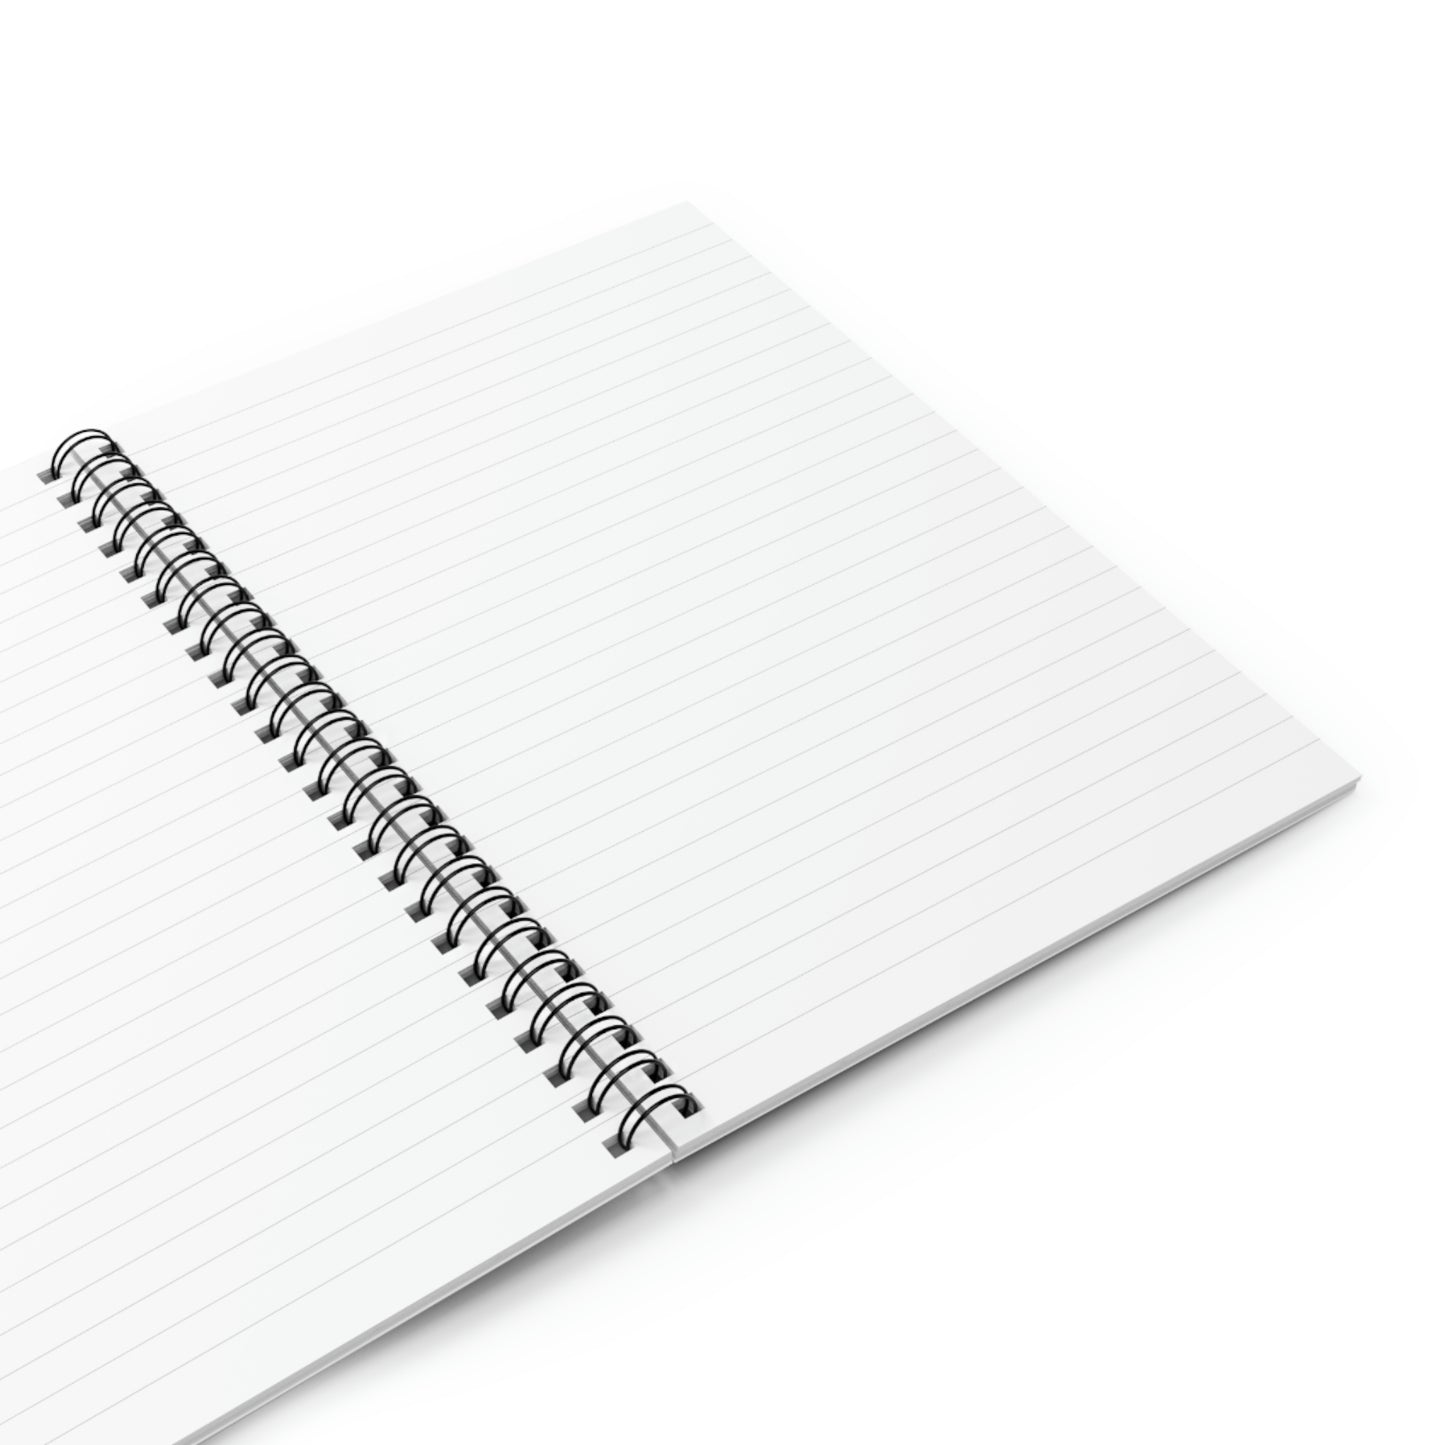 Voodoo Girl Spiral Notebook - Ruled Line - Regular Size- Gold Text Background